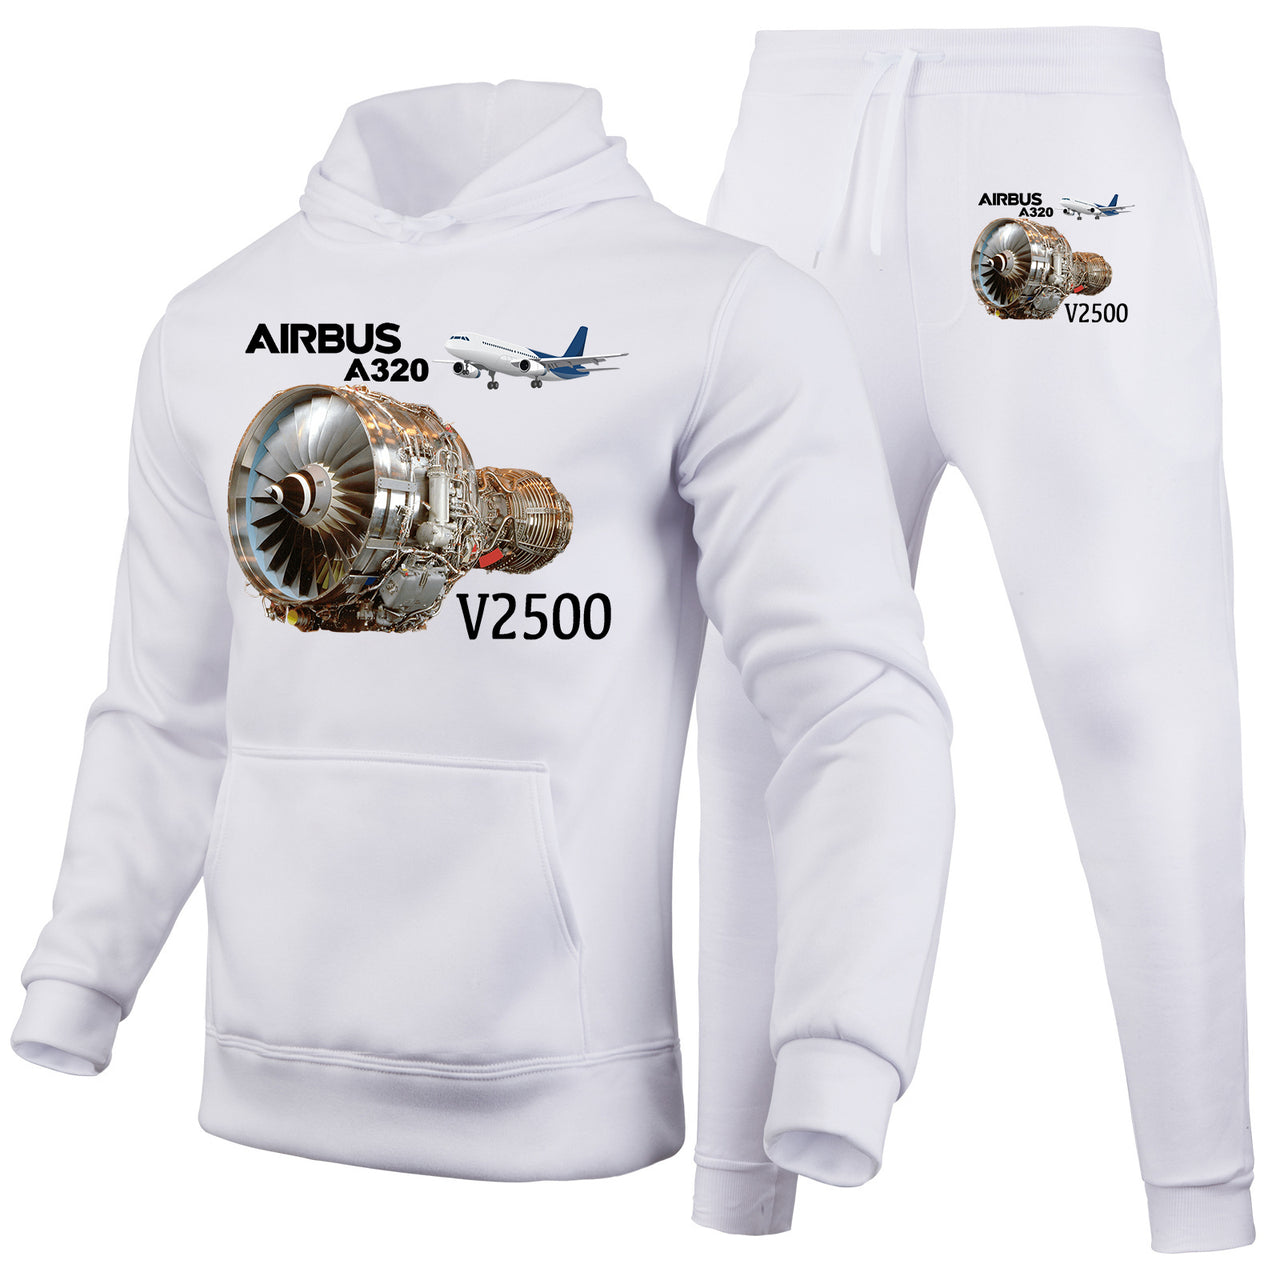 Airbus A320 & V2500 Engine Designed Hoodies & Sweatpants Set